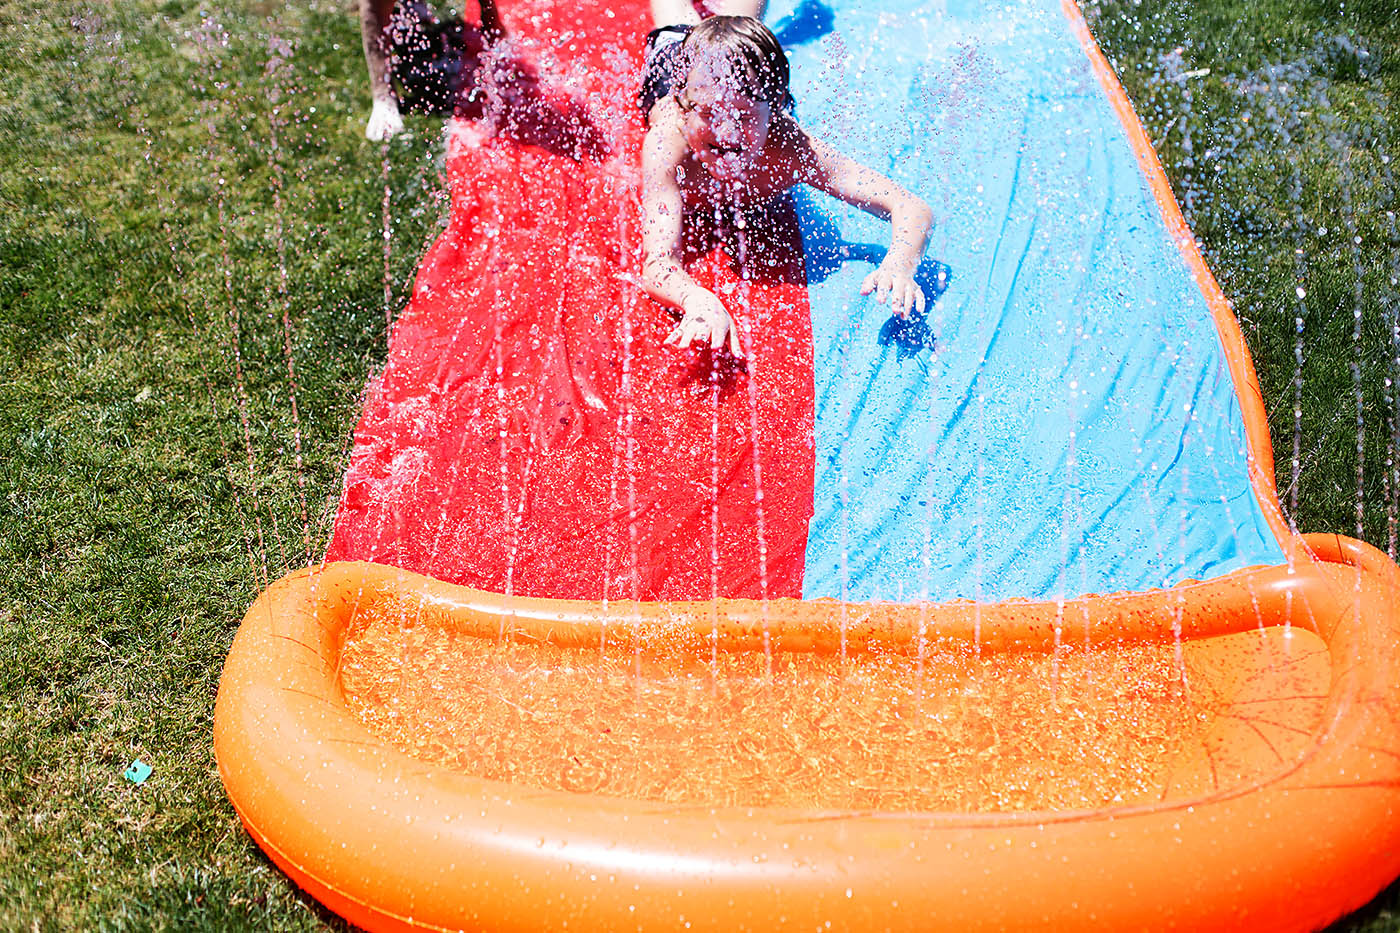 Water Slide fun